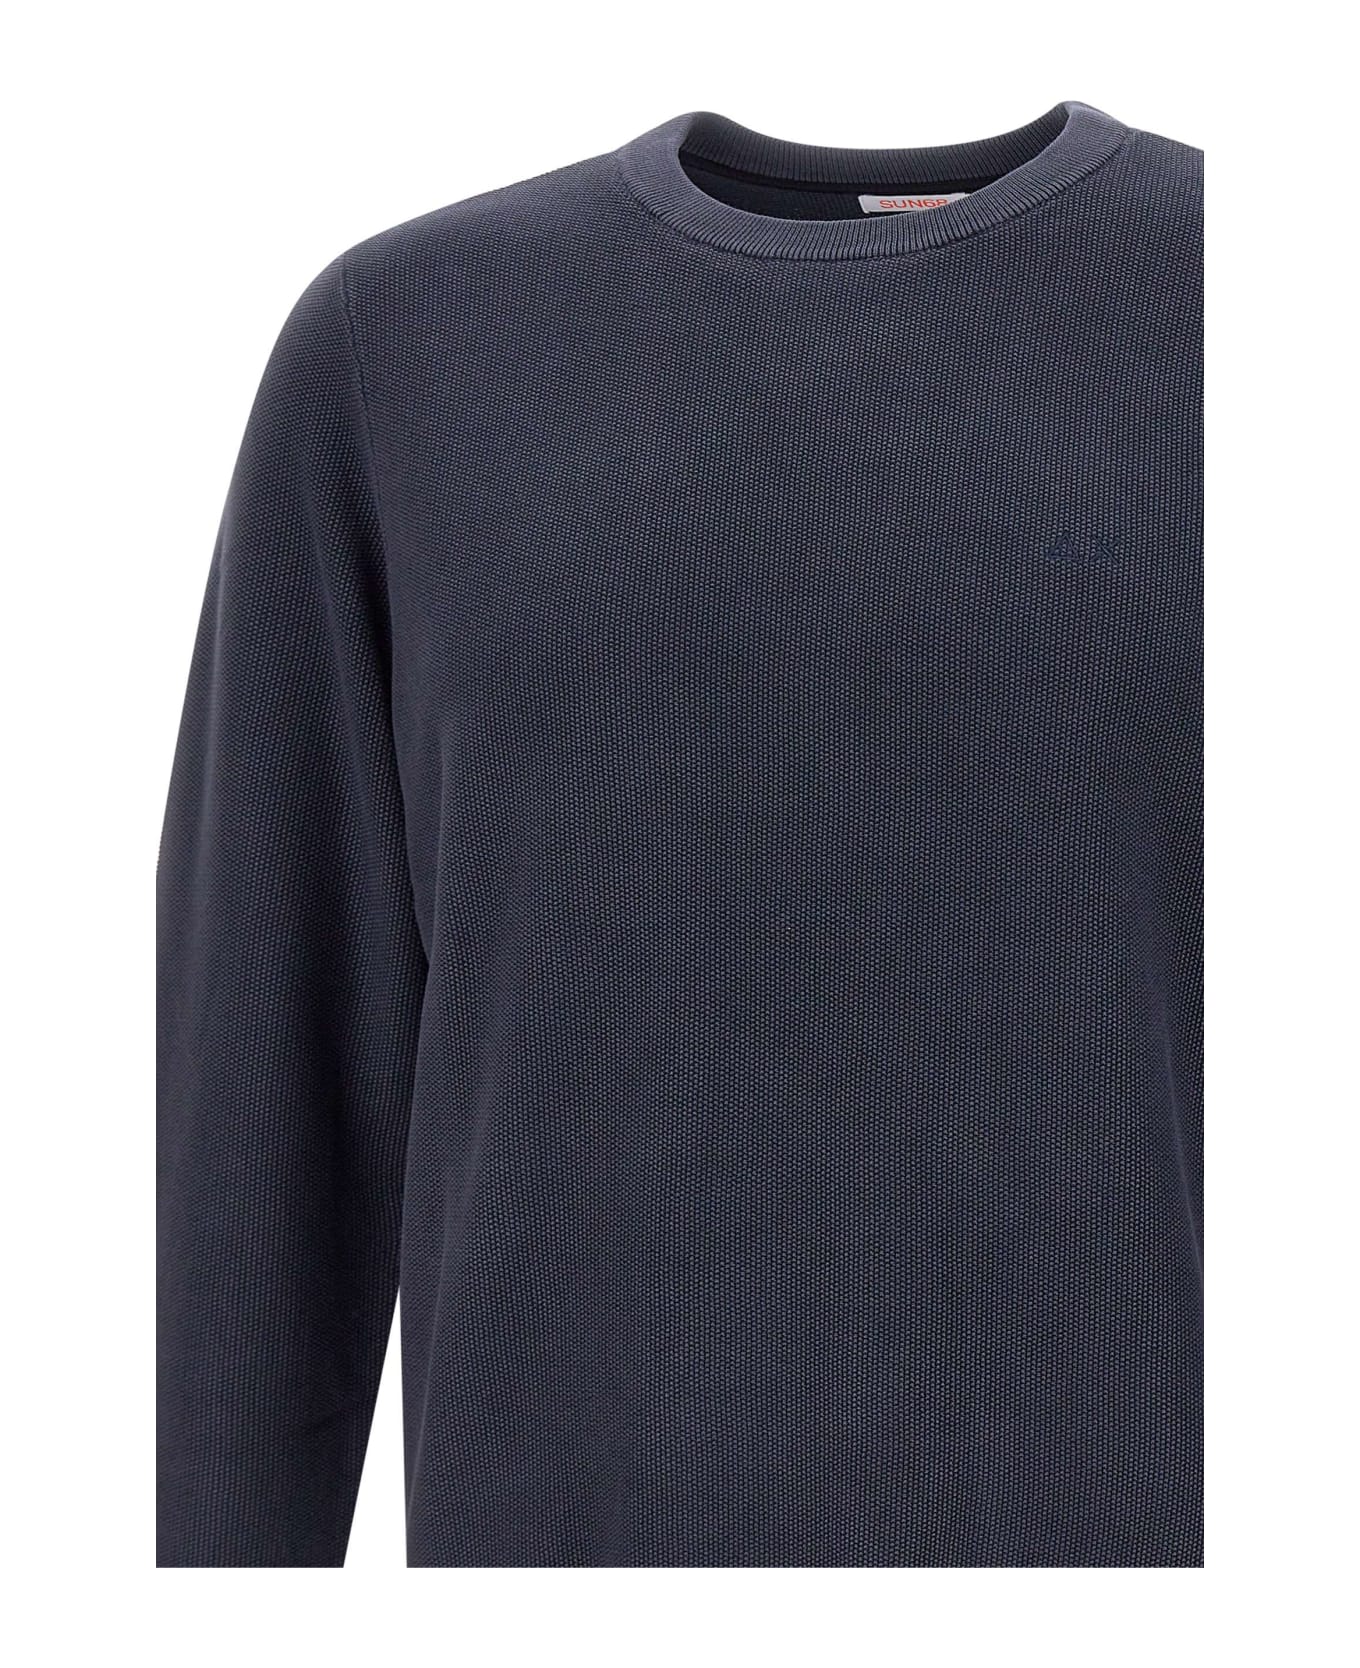 Sun 68 'round Vintage' Cotton Sweater Sweater - NAVY BLUE